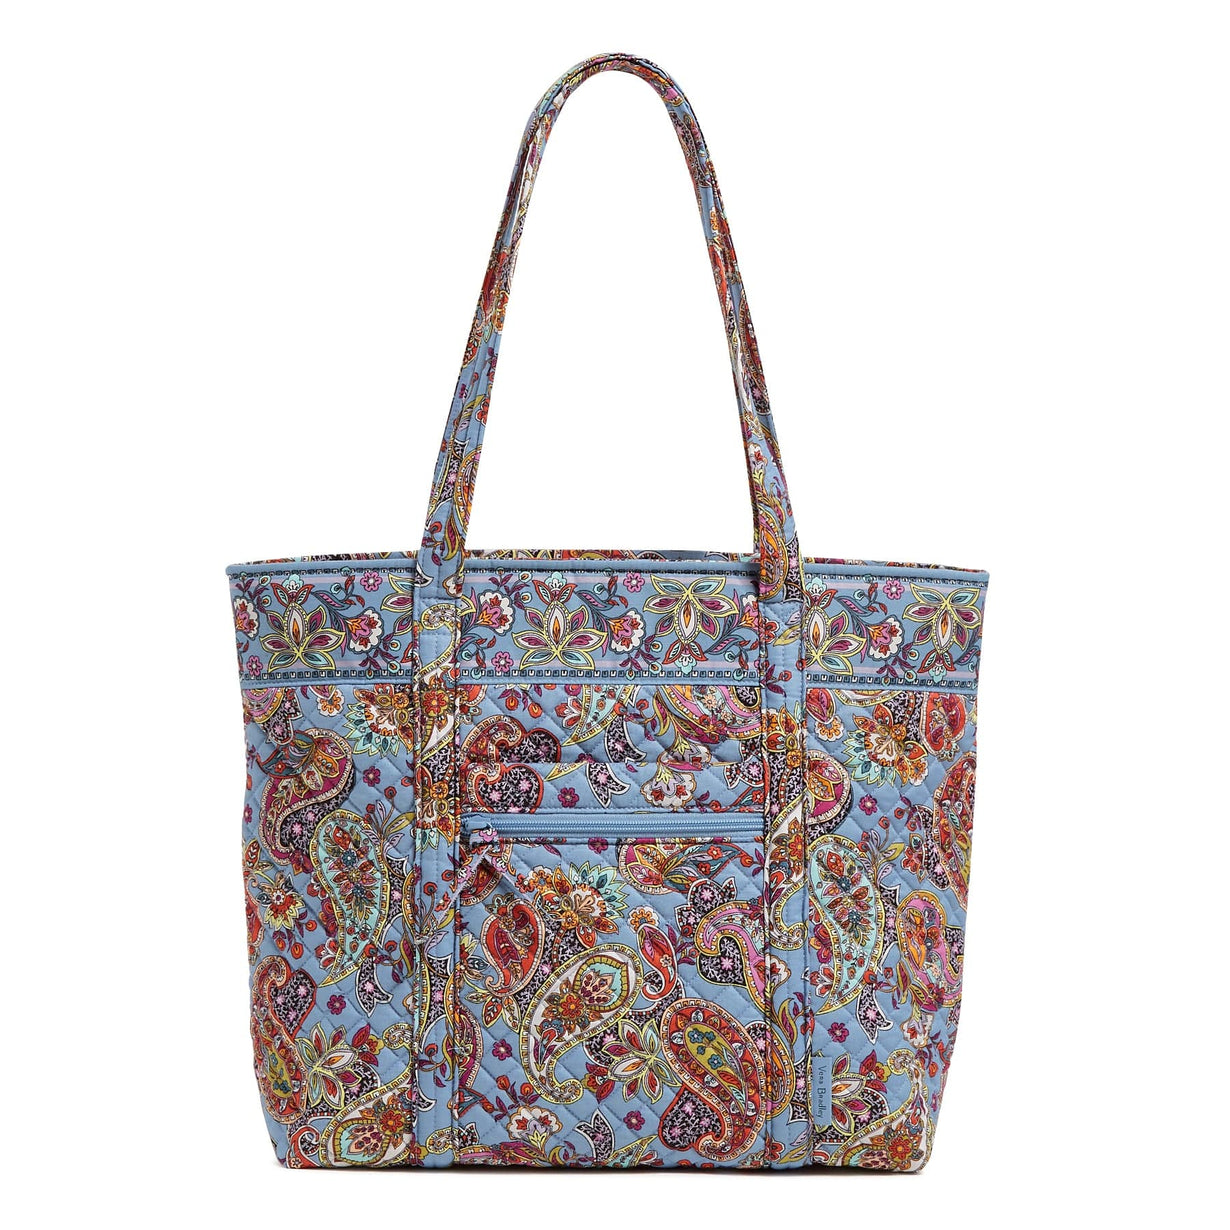 vera tote bag in blue paisley pattern